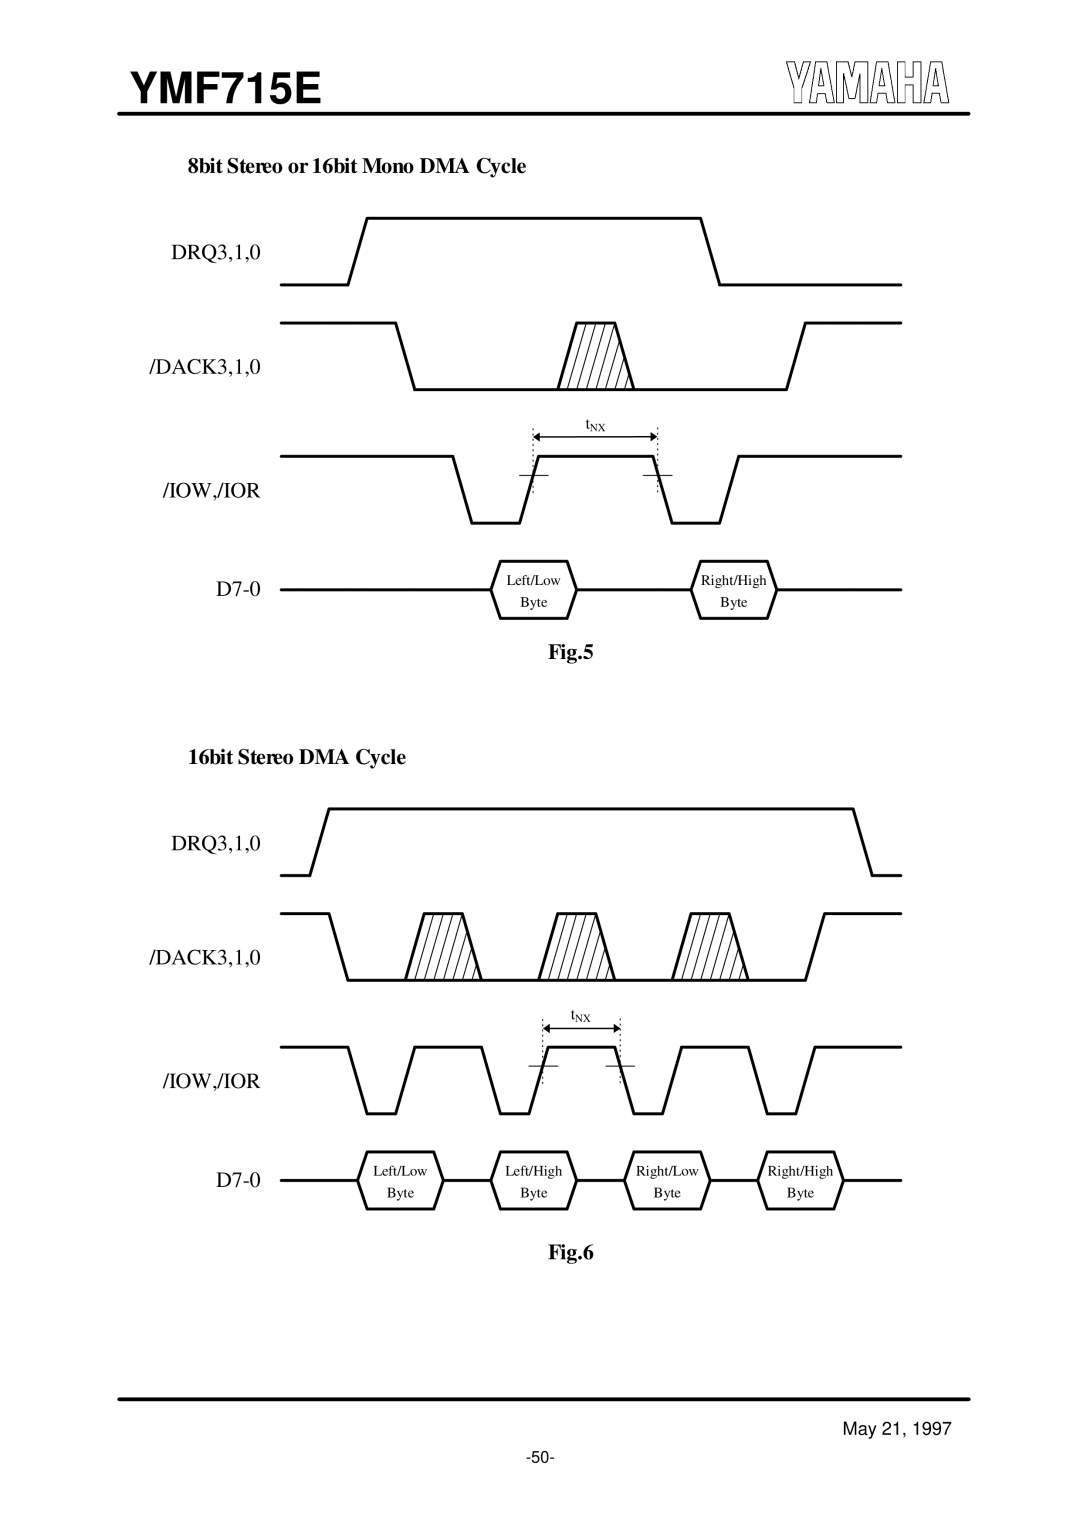 Yamaha OPL3-SA3 8bit Stereo or 16bit Mono DMA Cycle, Iow,/Ior, 16bit Stereo DMA Cycle, YMF715E, DRQ3,1,0 DACK3,1,0, D7-0 